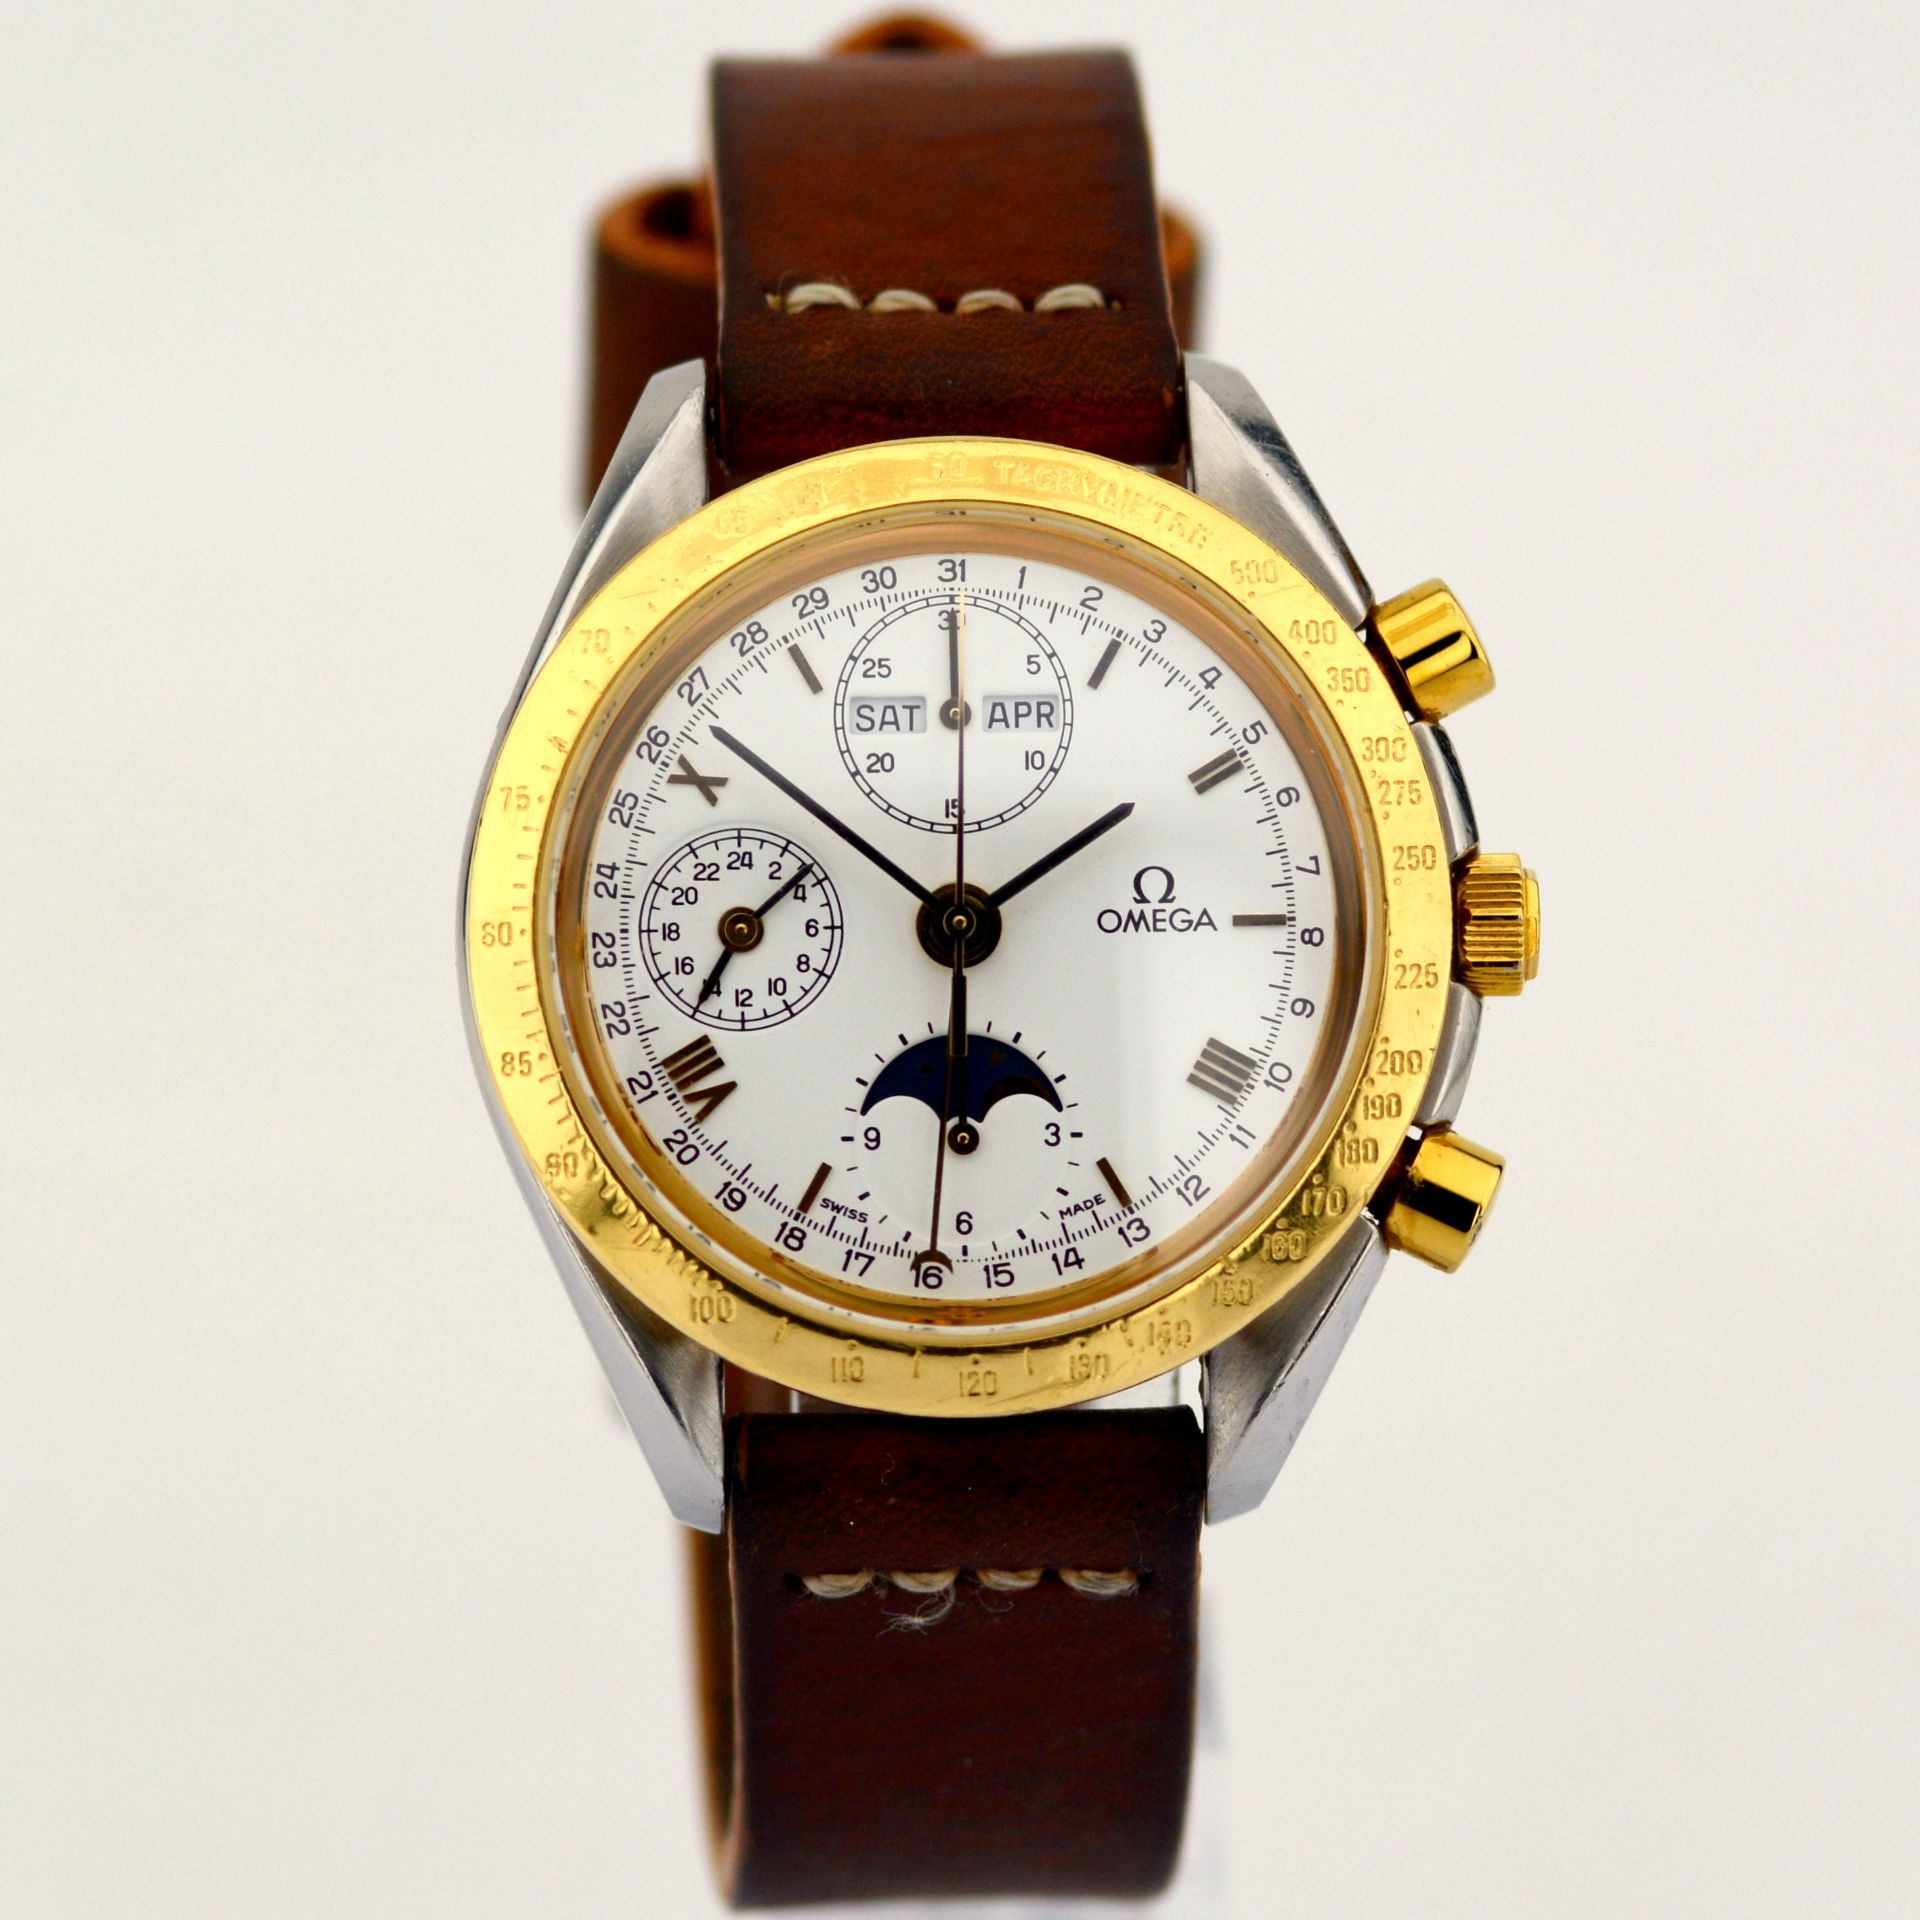 Omega / Speedmaster Triple Calendar Moonphase Chronograph - Gentlmen's Steel Wrist Watch - Image 7 of 9